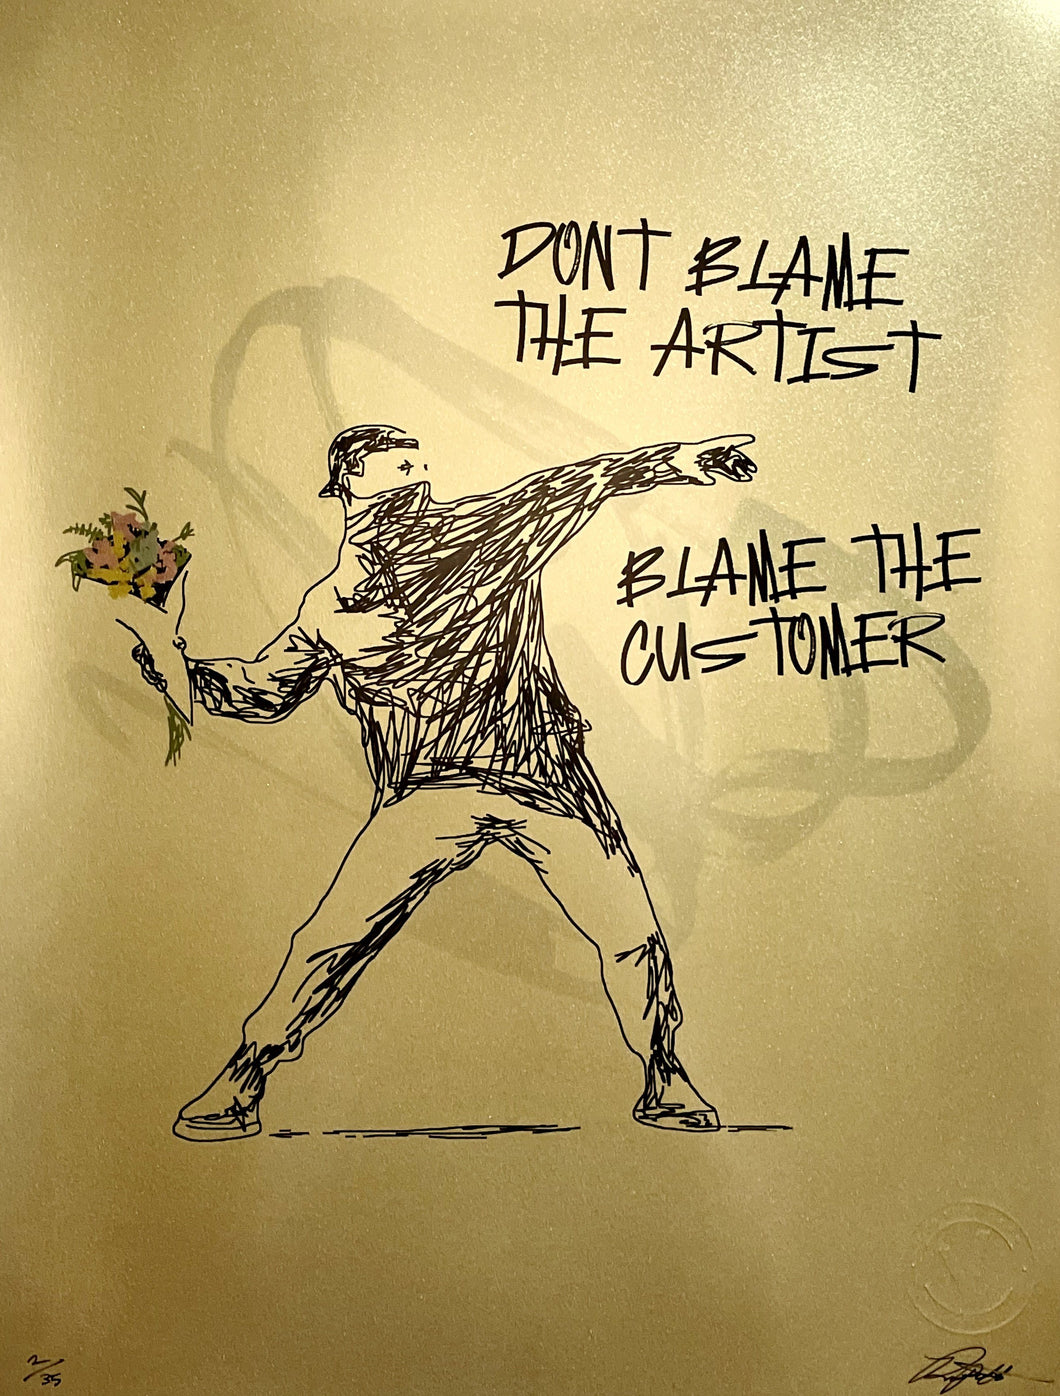 Don't Blame The Artist (Gold Variant) Print Ripoff